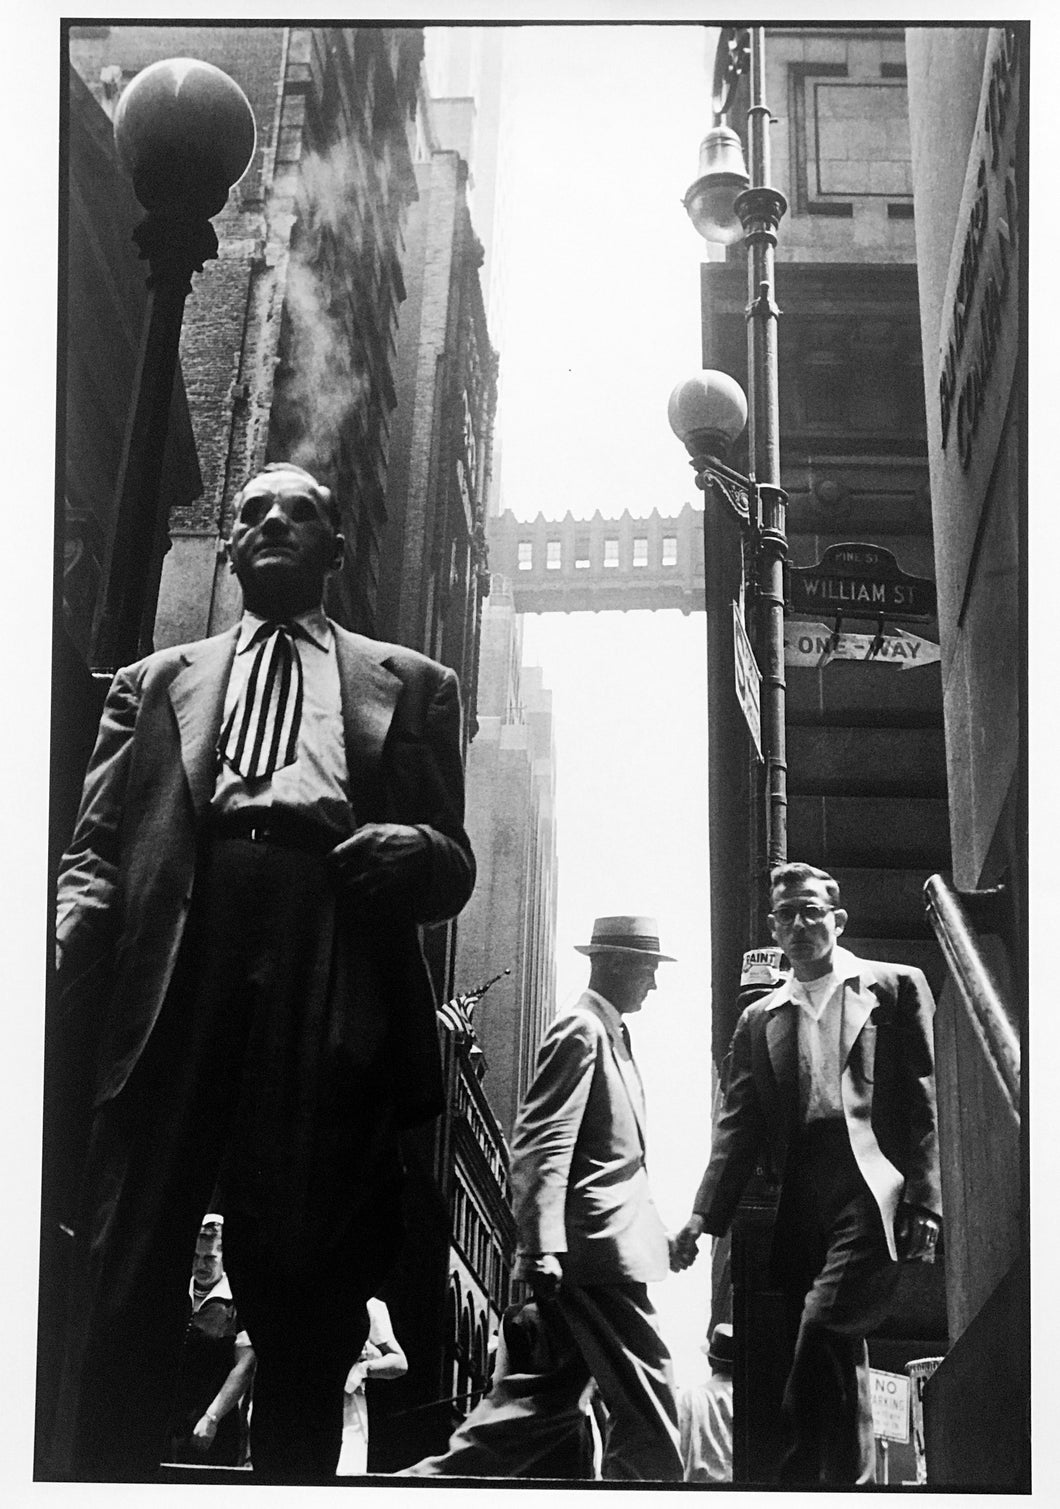 Wall Street, New York City, Documentary Photography 1950s by Leonard Freed